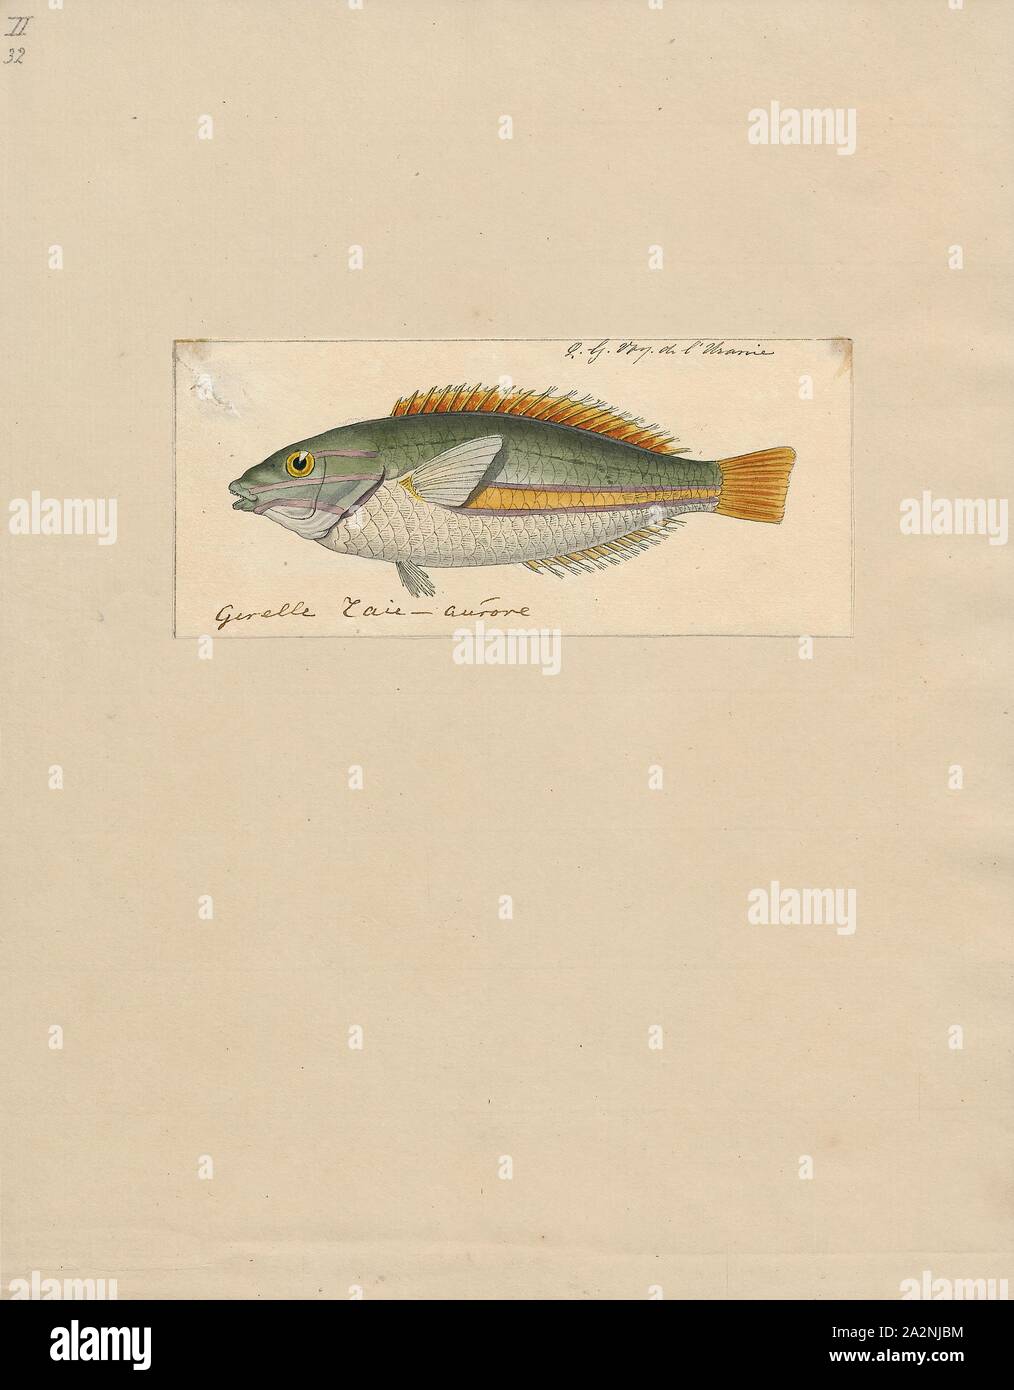 Stethojulis albovittata, Print, Stethojulis albovittatus, commonly known as the Rainbowfish, is a reef-dwelling fish that feeds on small invertebrates., 1824-1839 Stock Photo